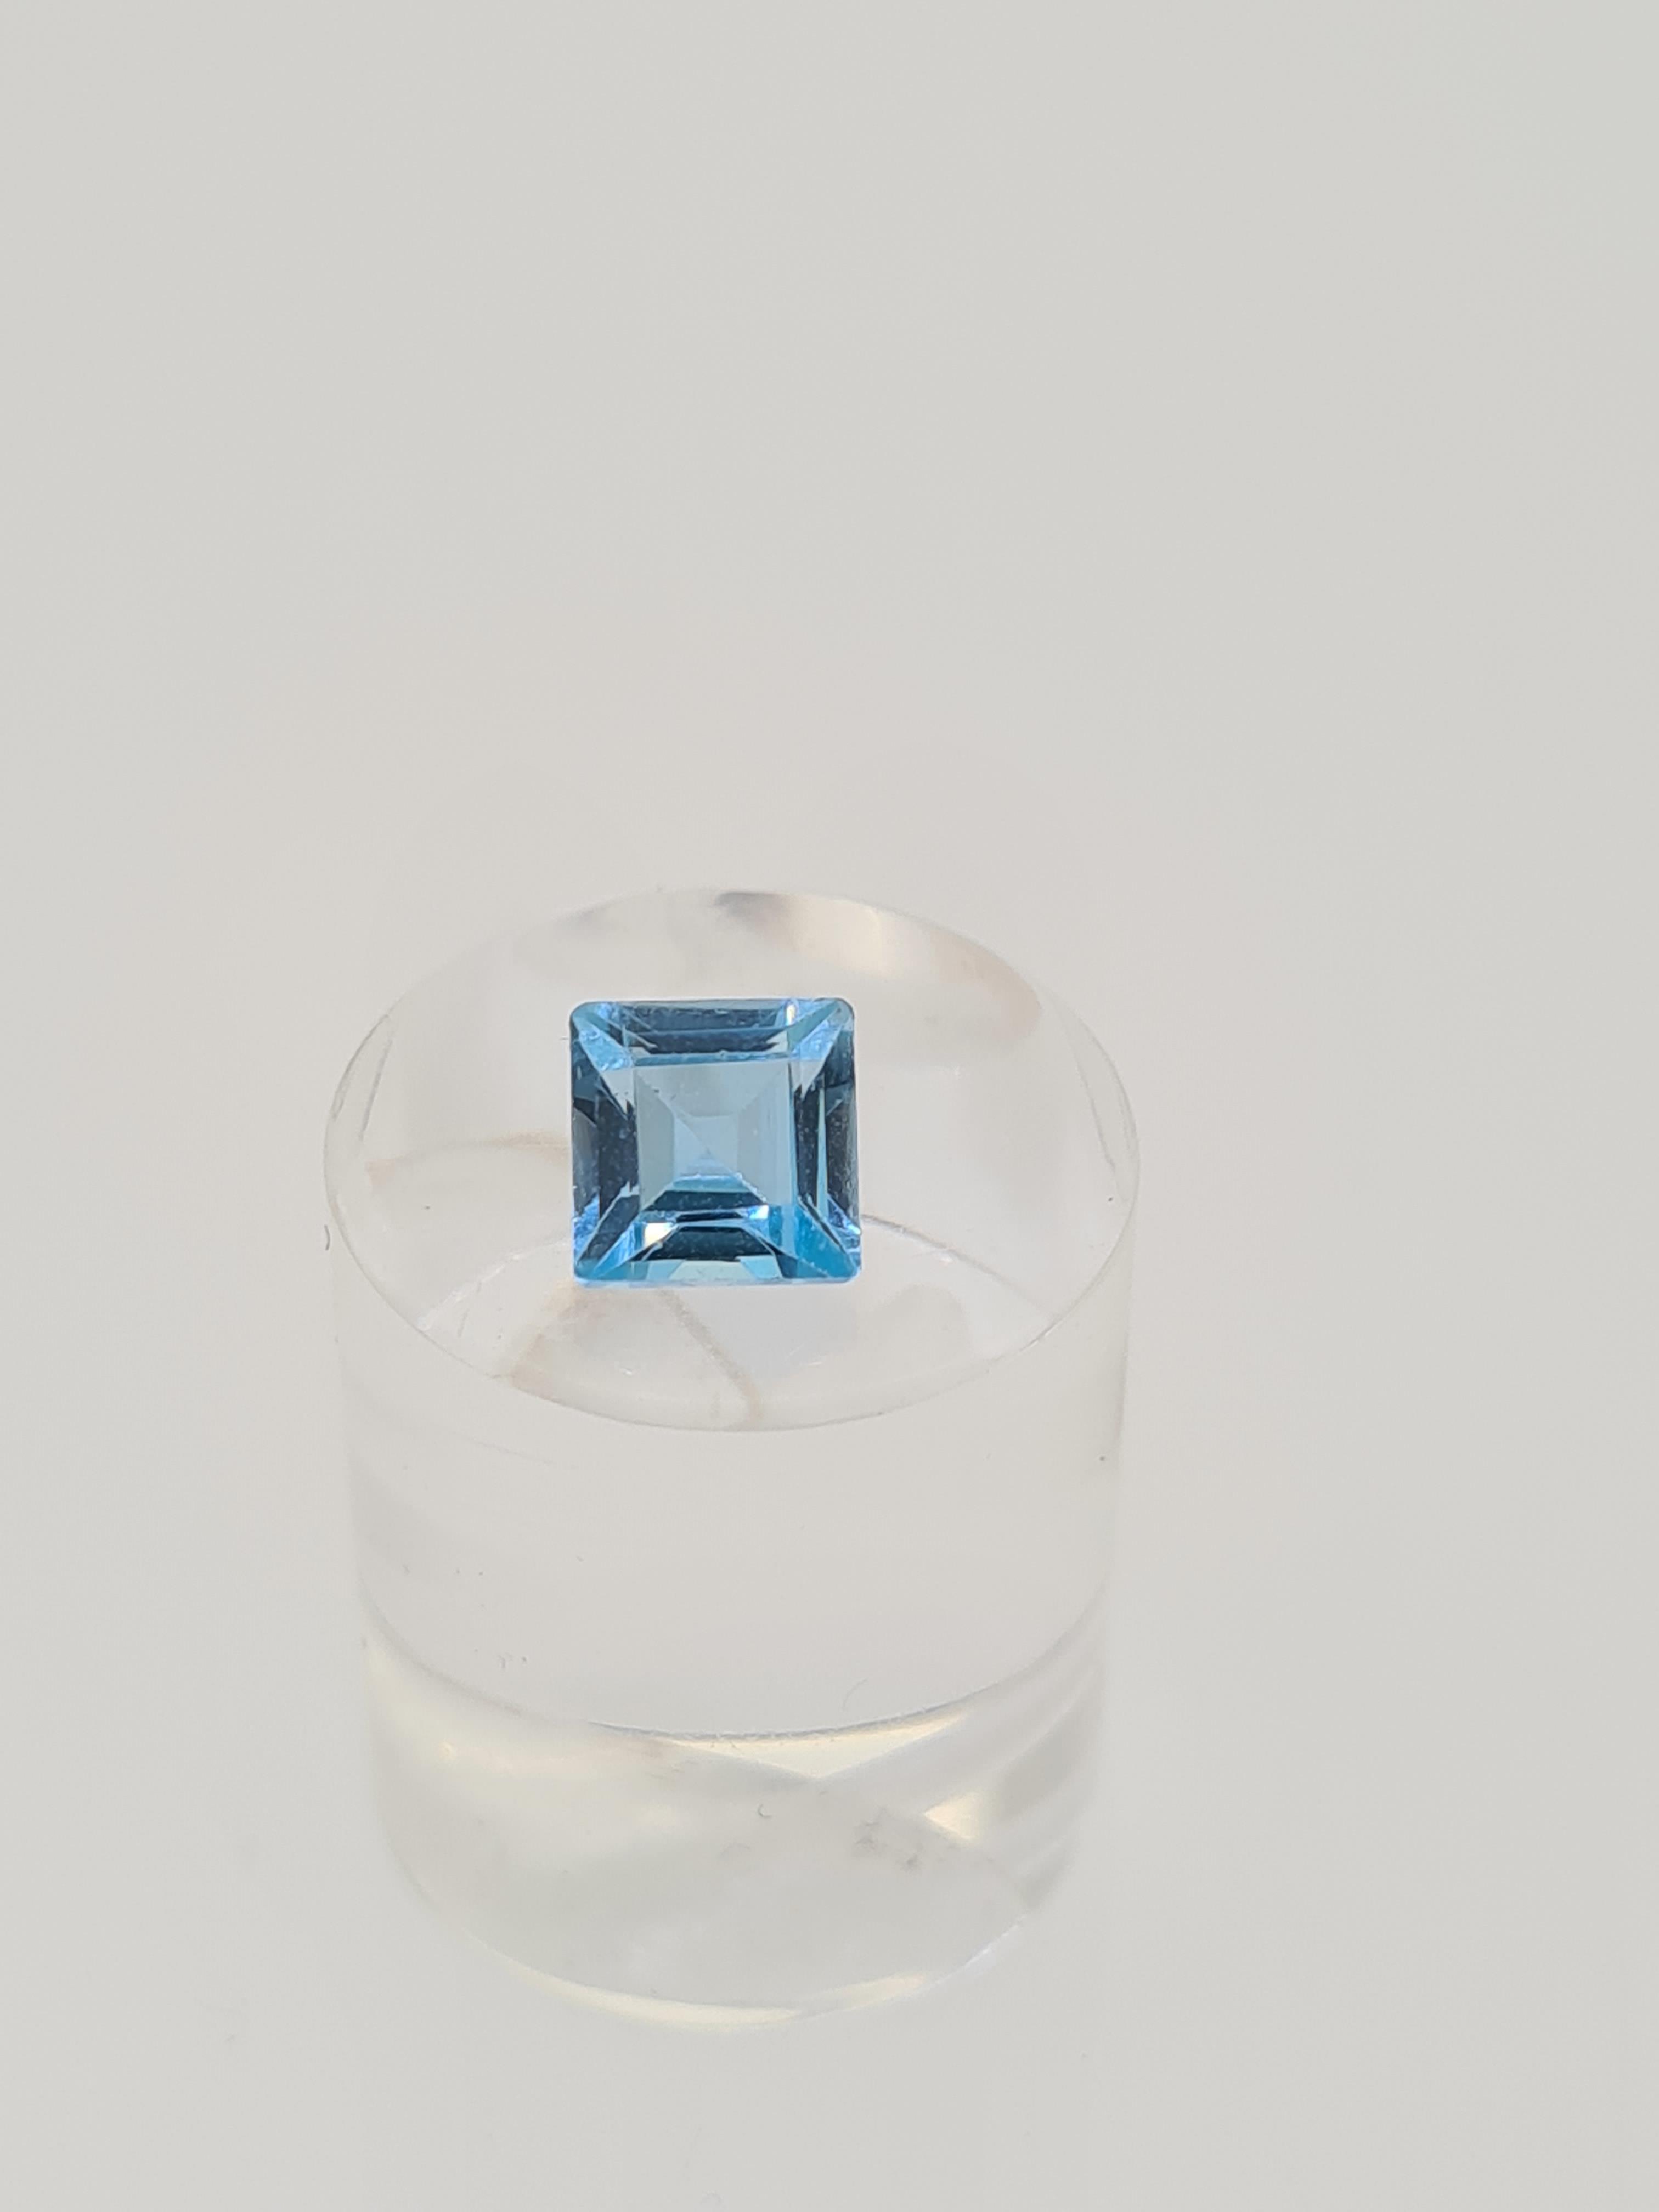 Blue topaz sqaure cut gem stone